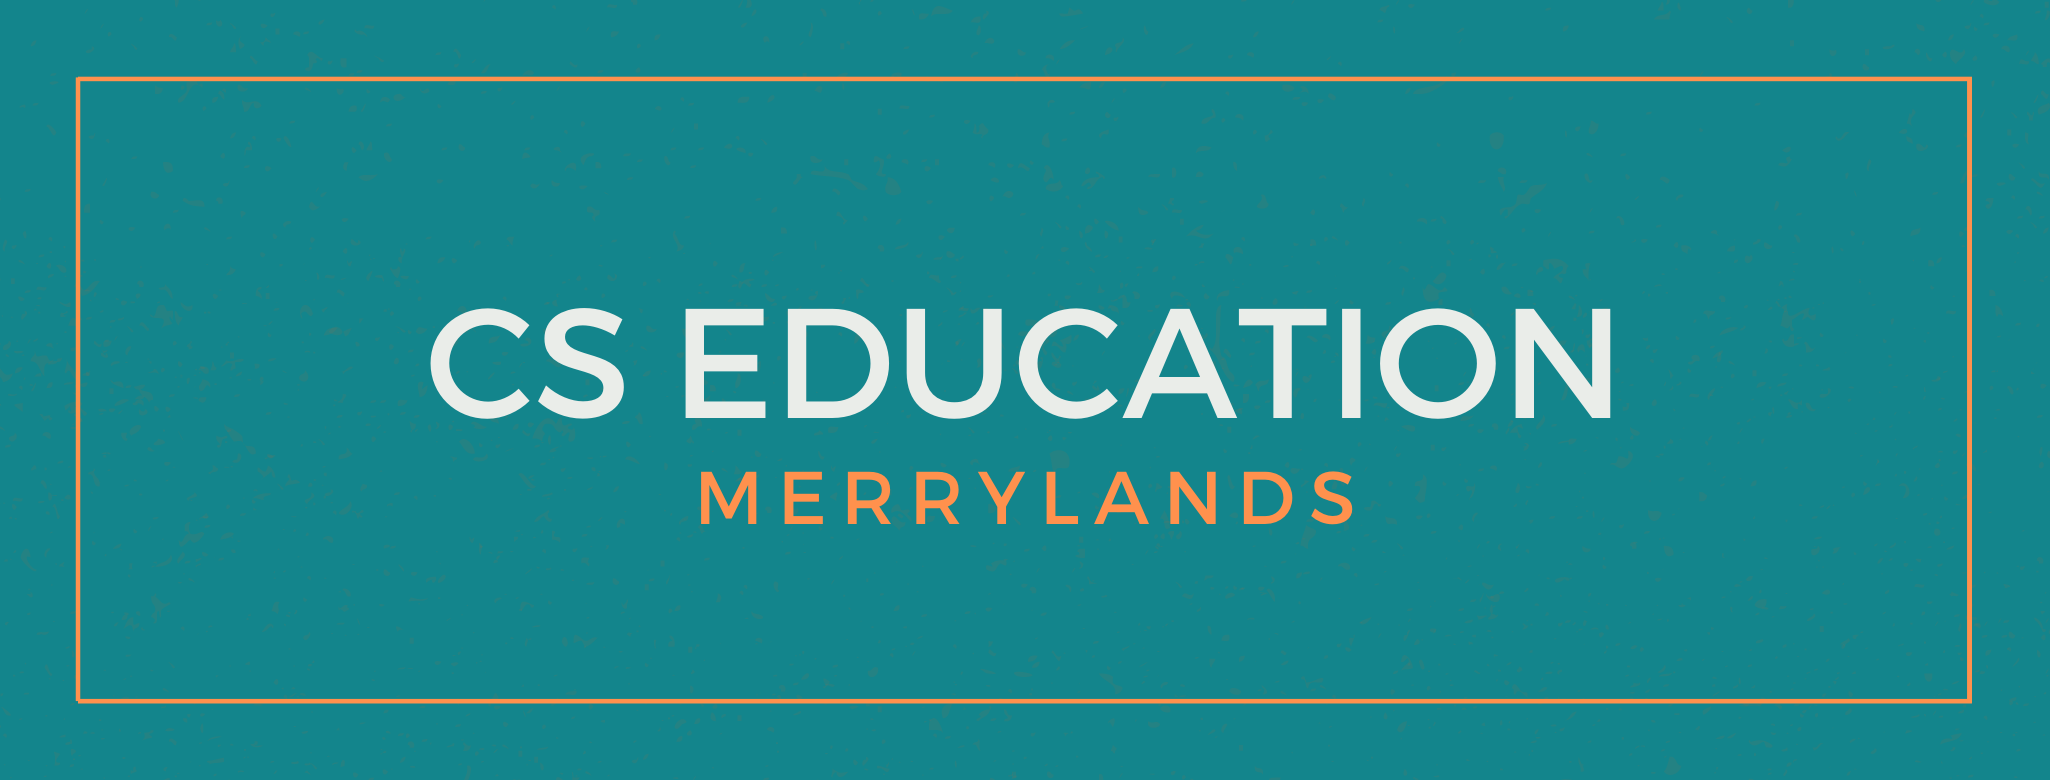 CS Education Merrylands